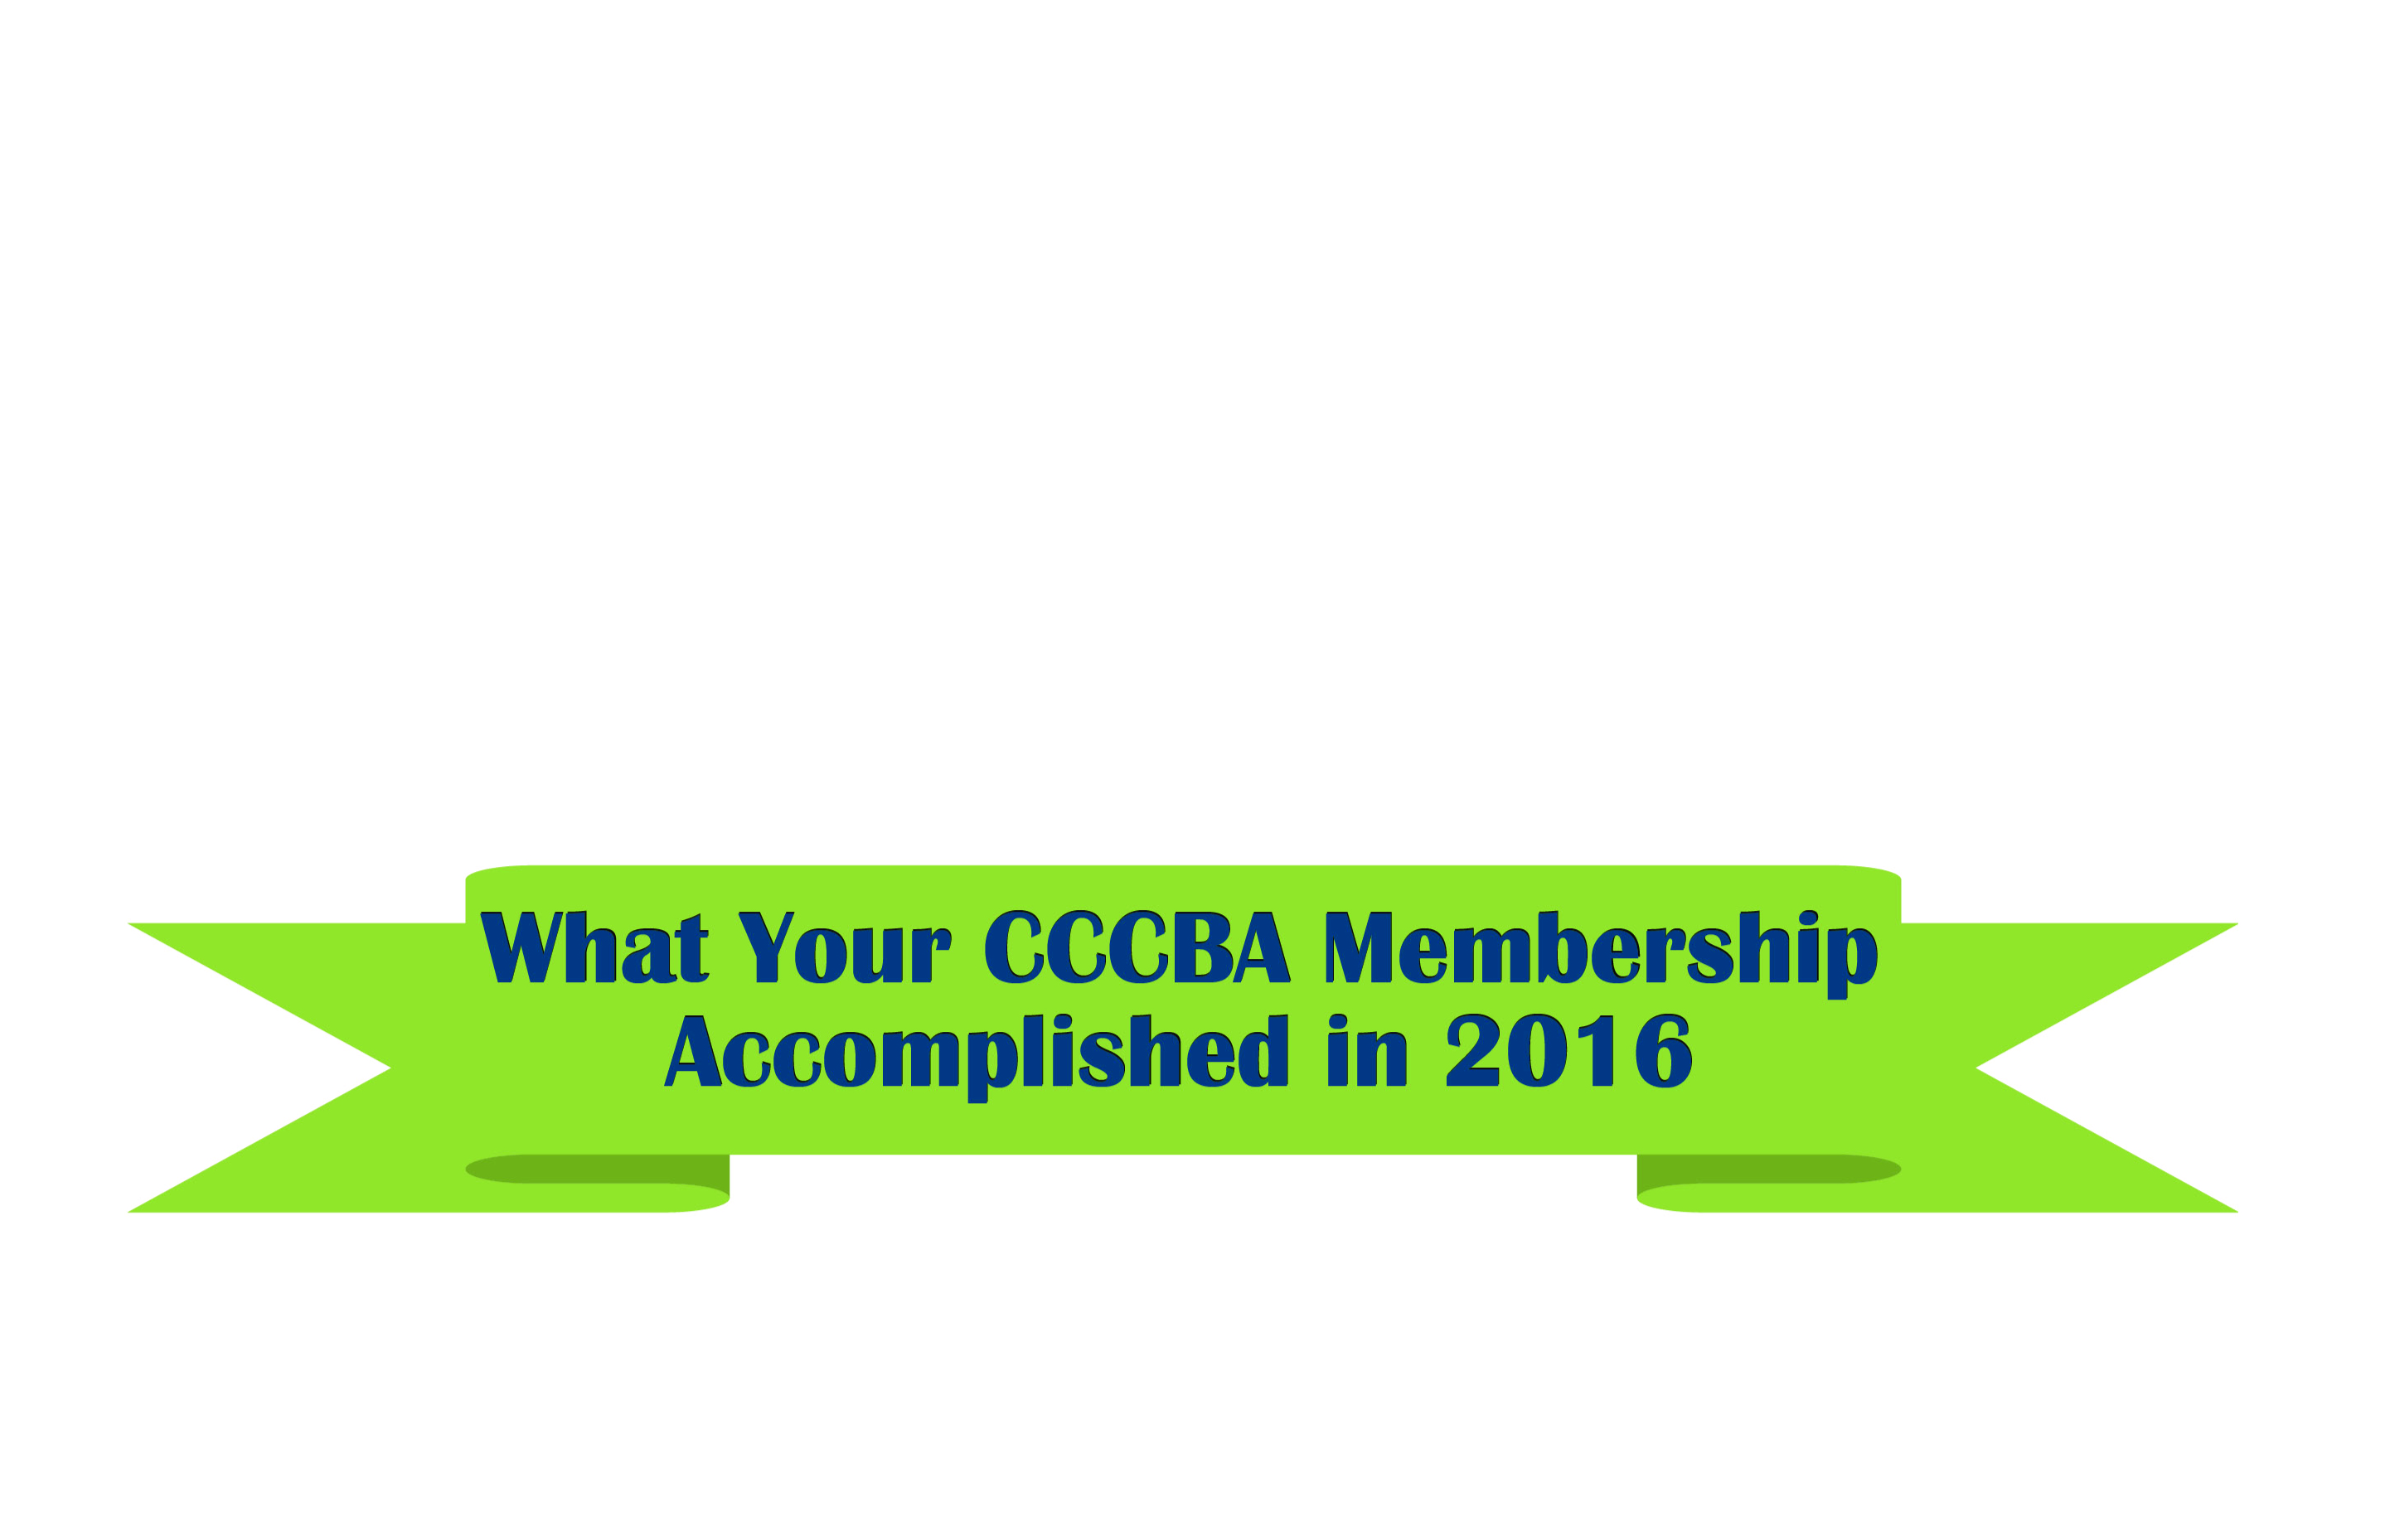 2016 CCCBA Accomplishments